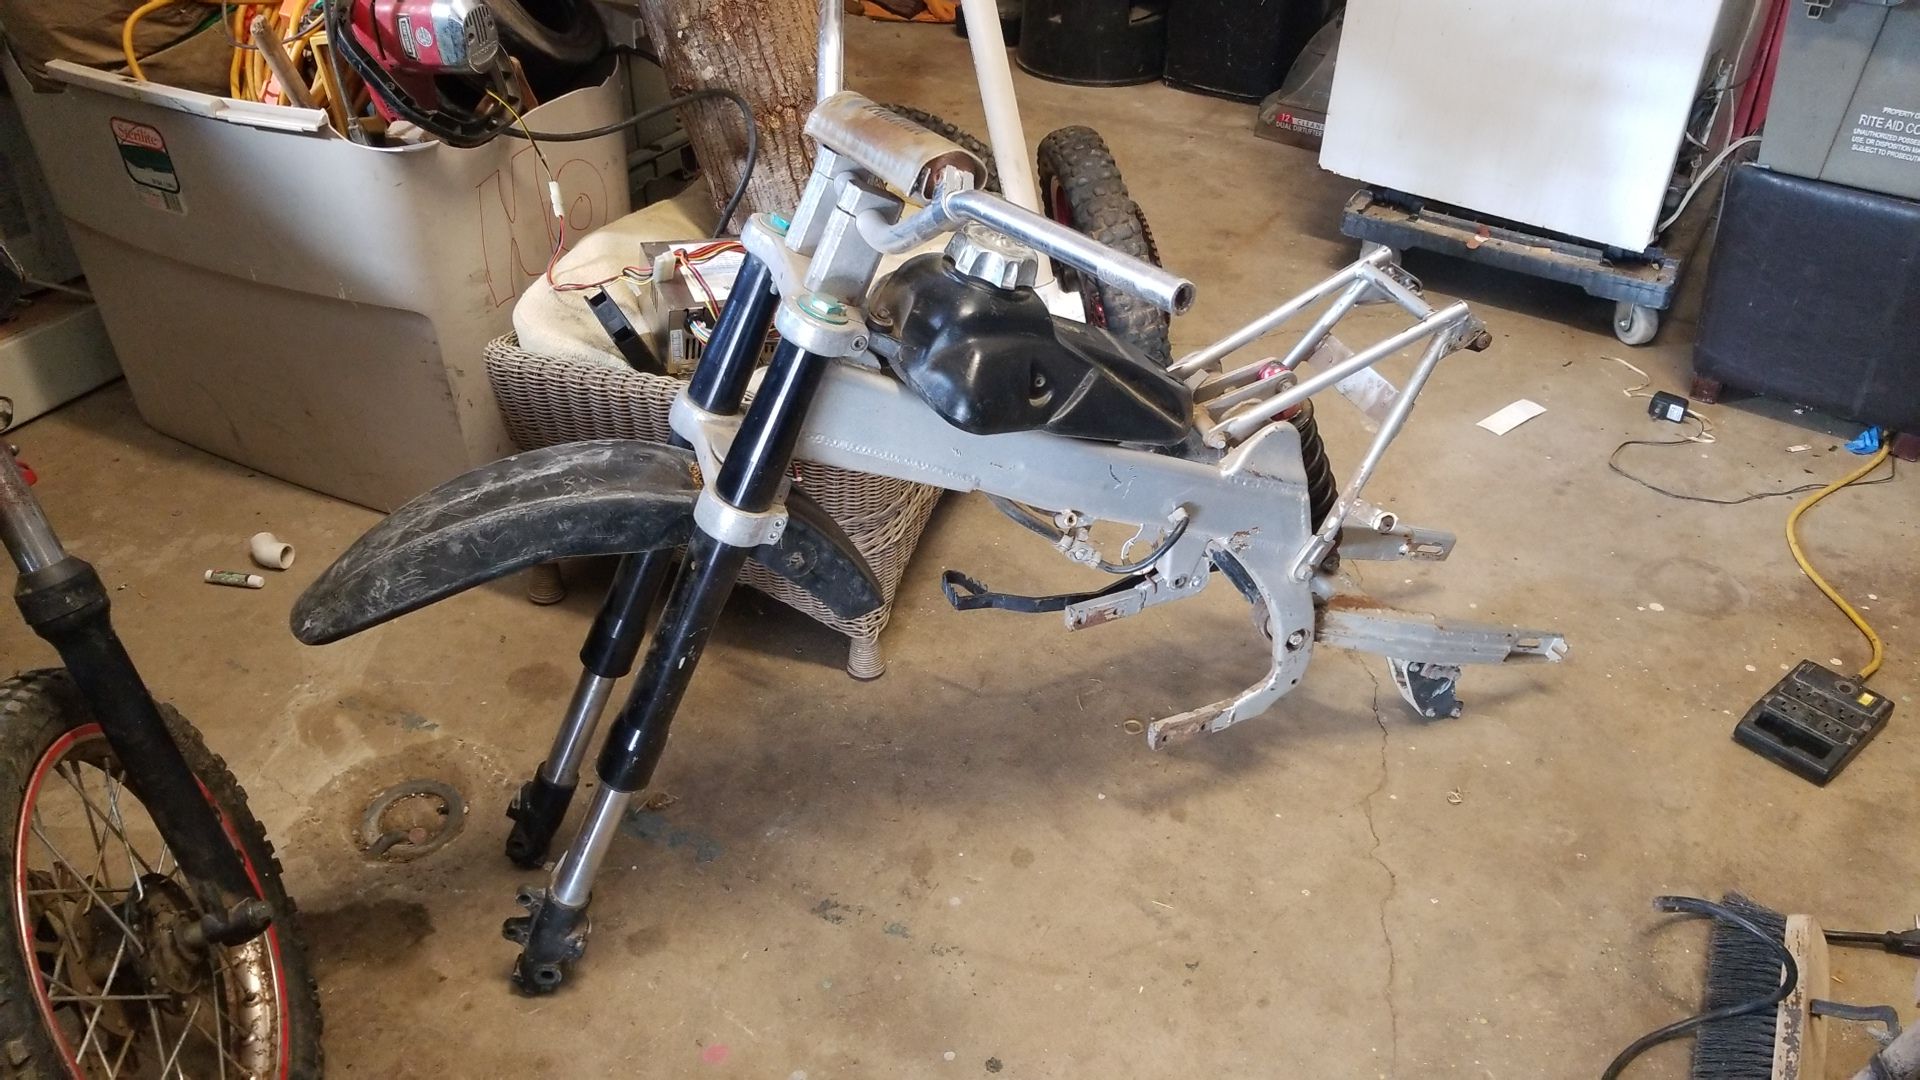 Dirt bike frame with gas tank